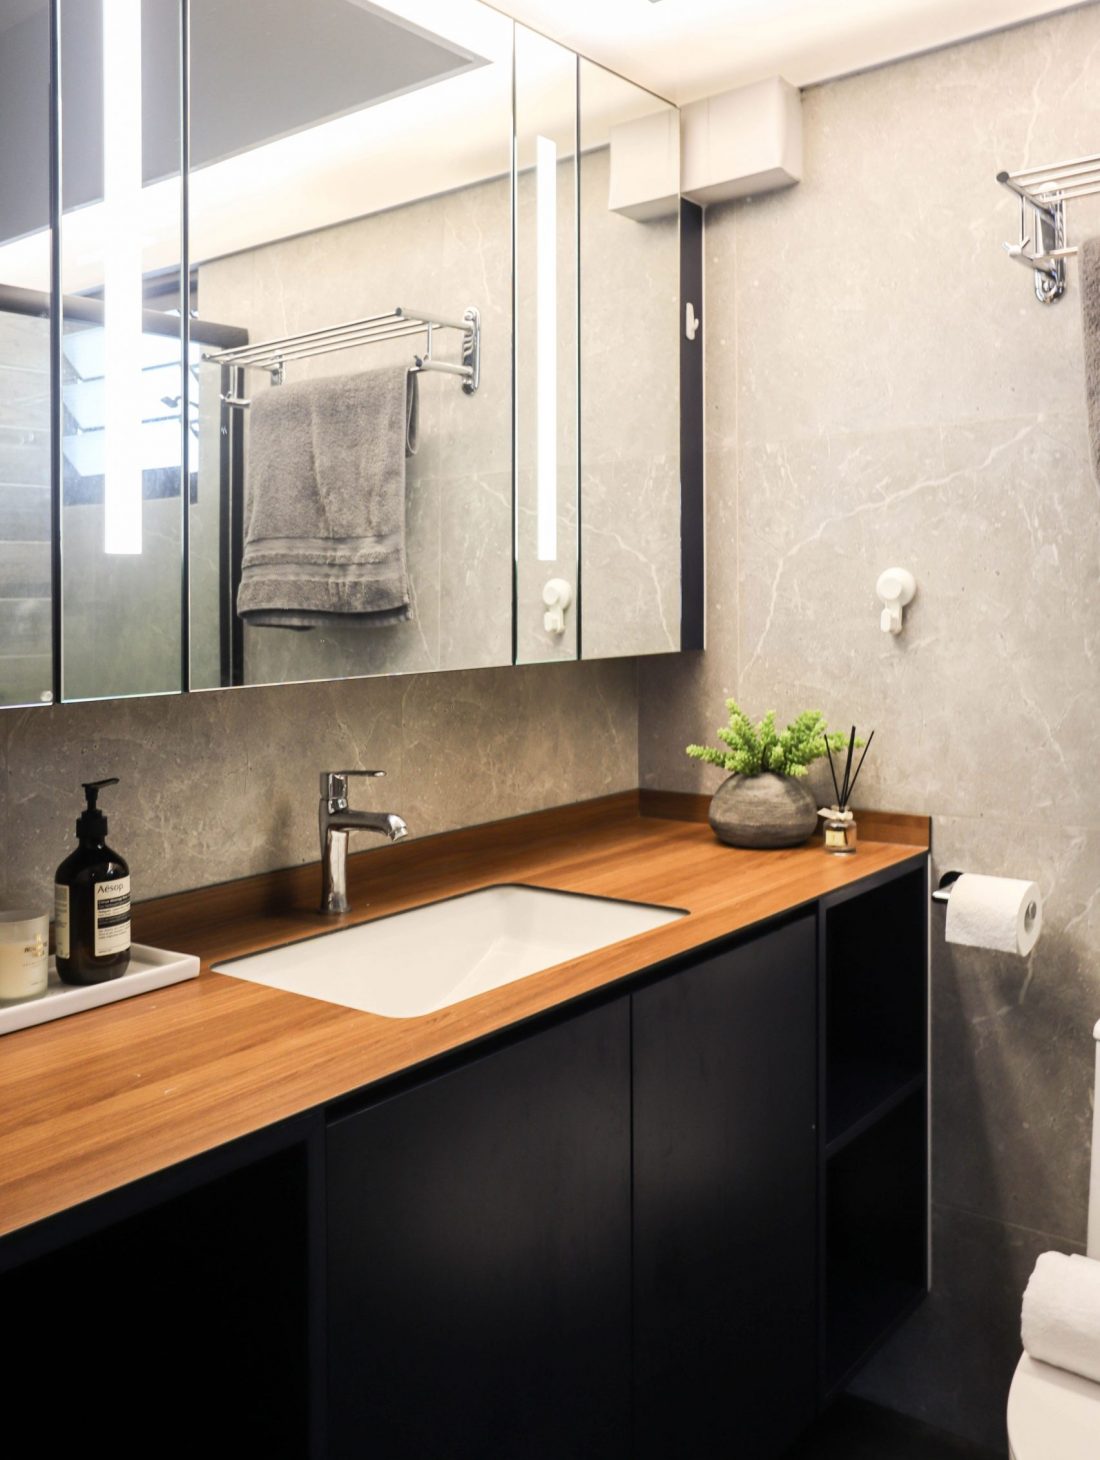 5 Room HDB Resale Dark Modern Toilet Renovation-Punggol-Topaz Custom Built Vanity